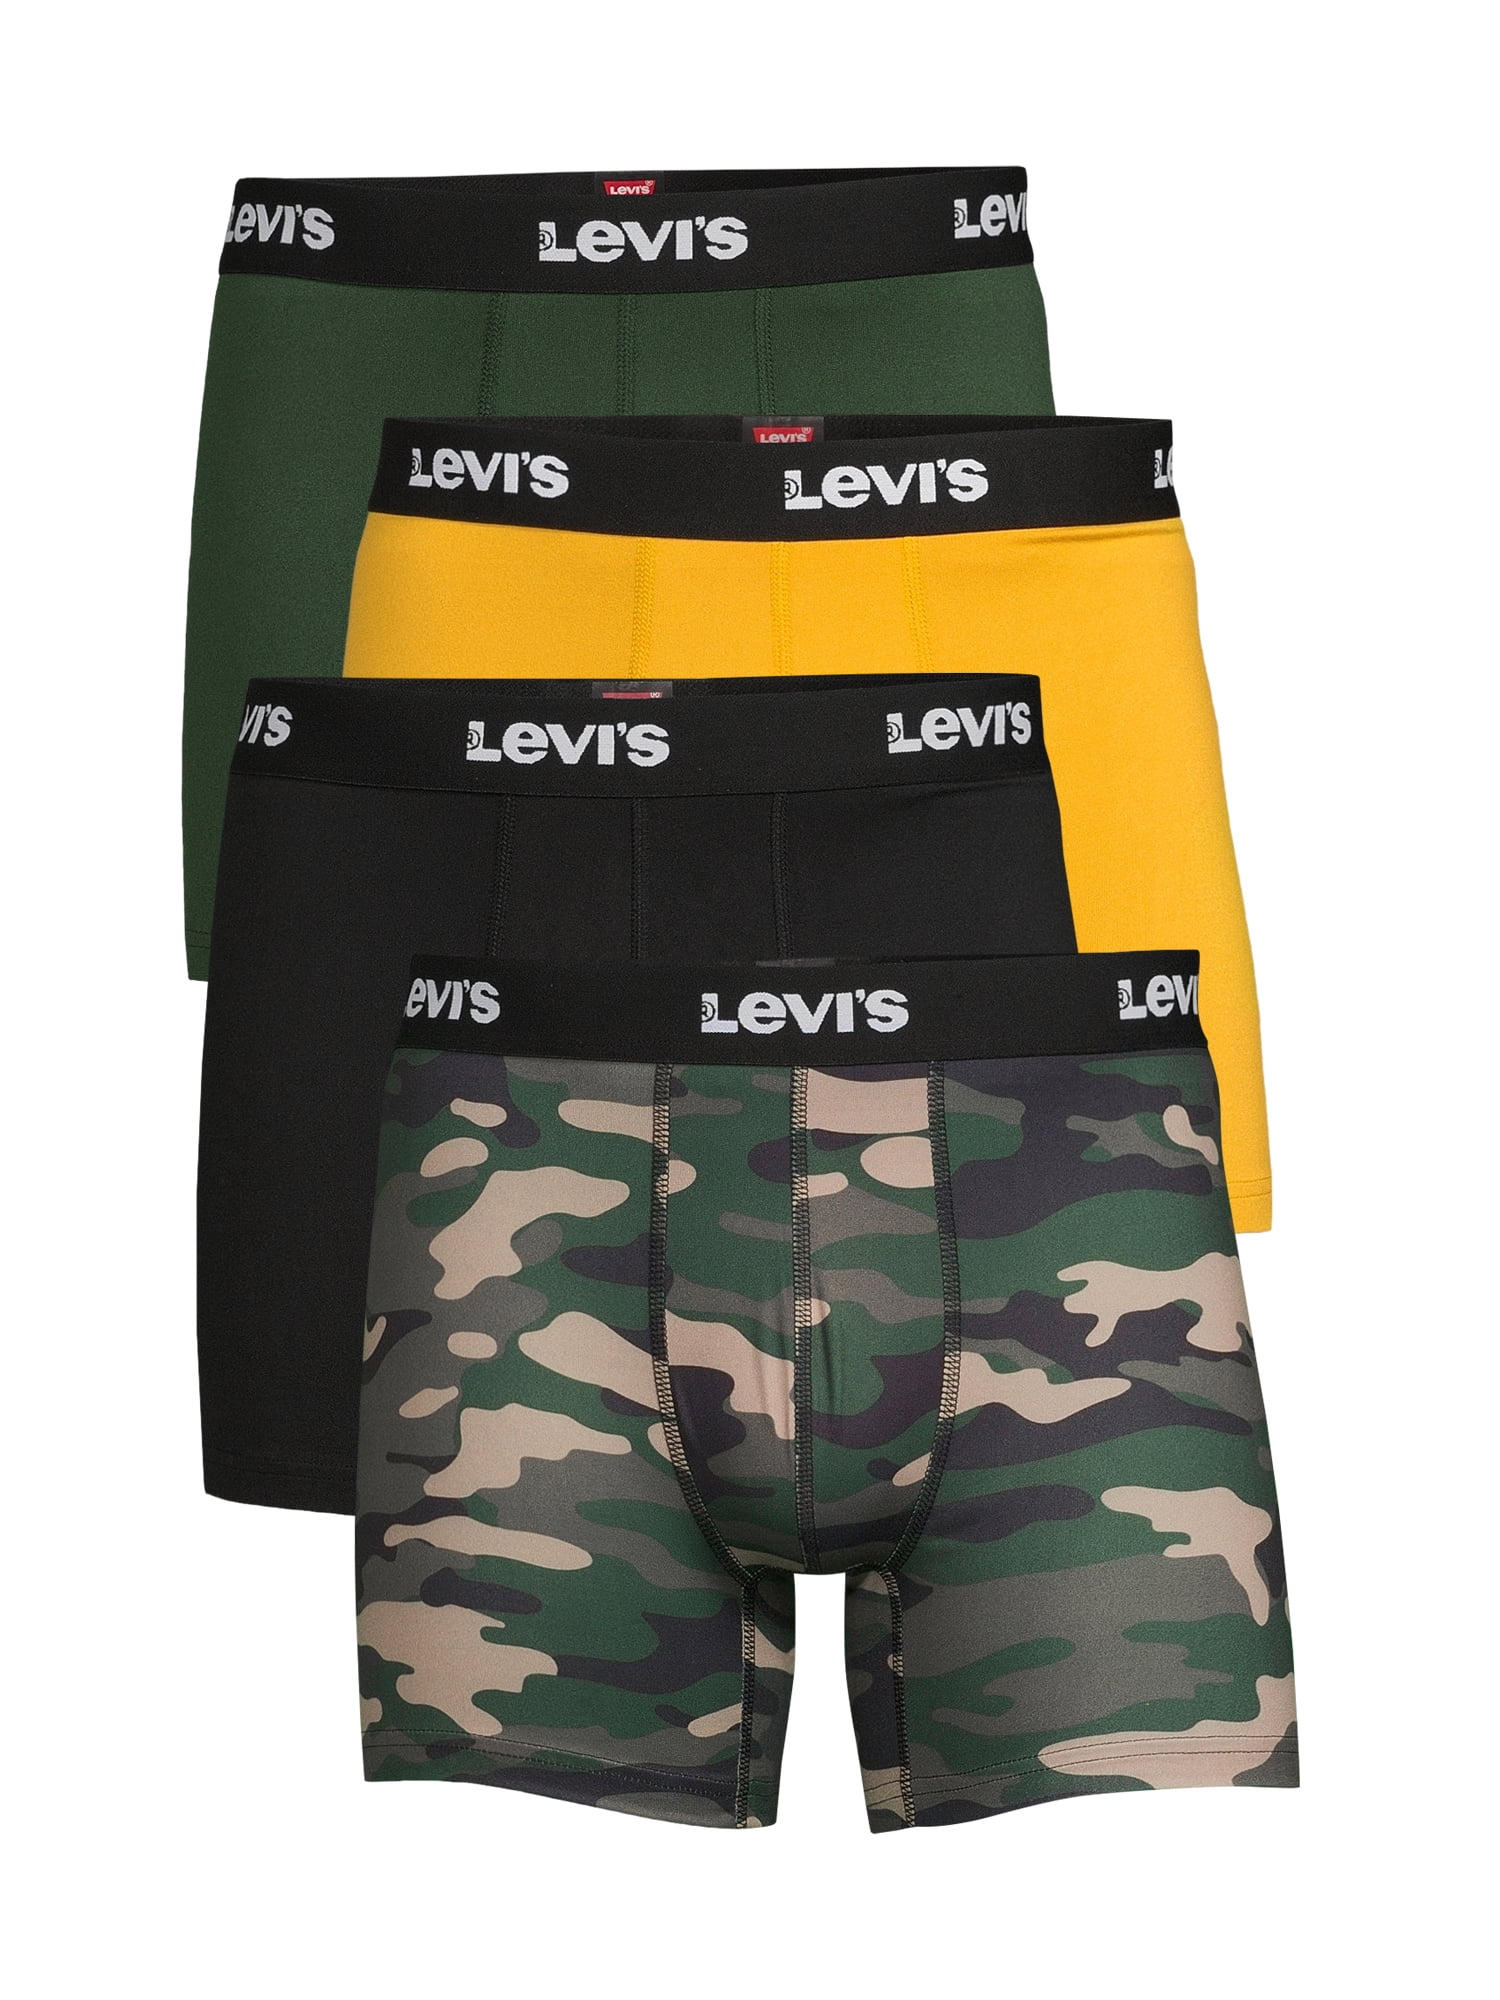 Mens Underwear Micro Boxer Brief for Men Pack of 4 LEVIS Mens Boxer Briefs